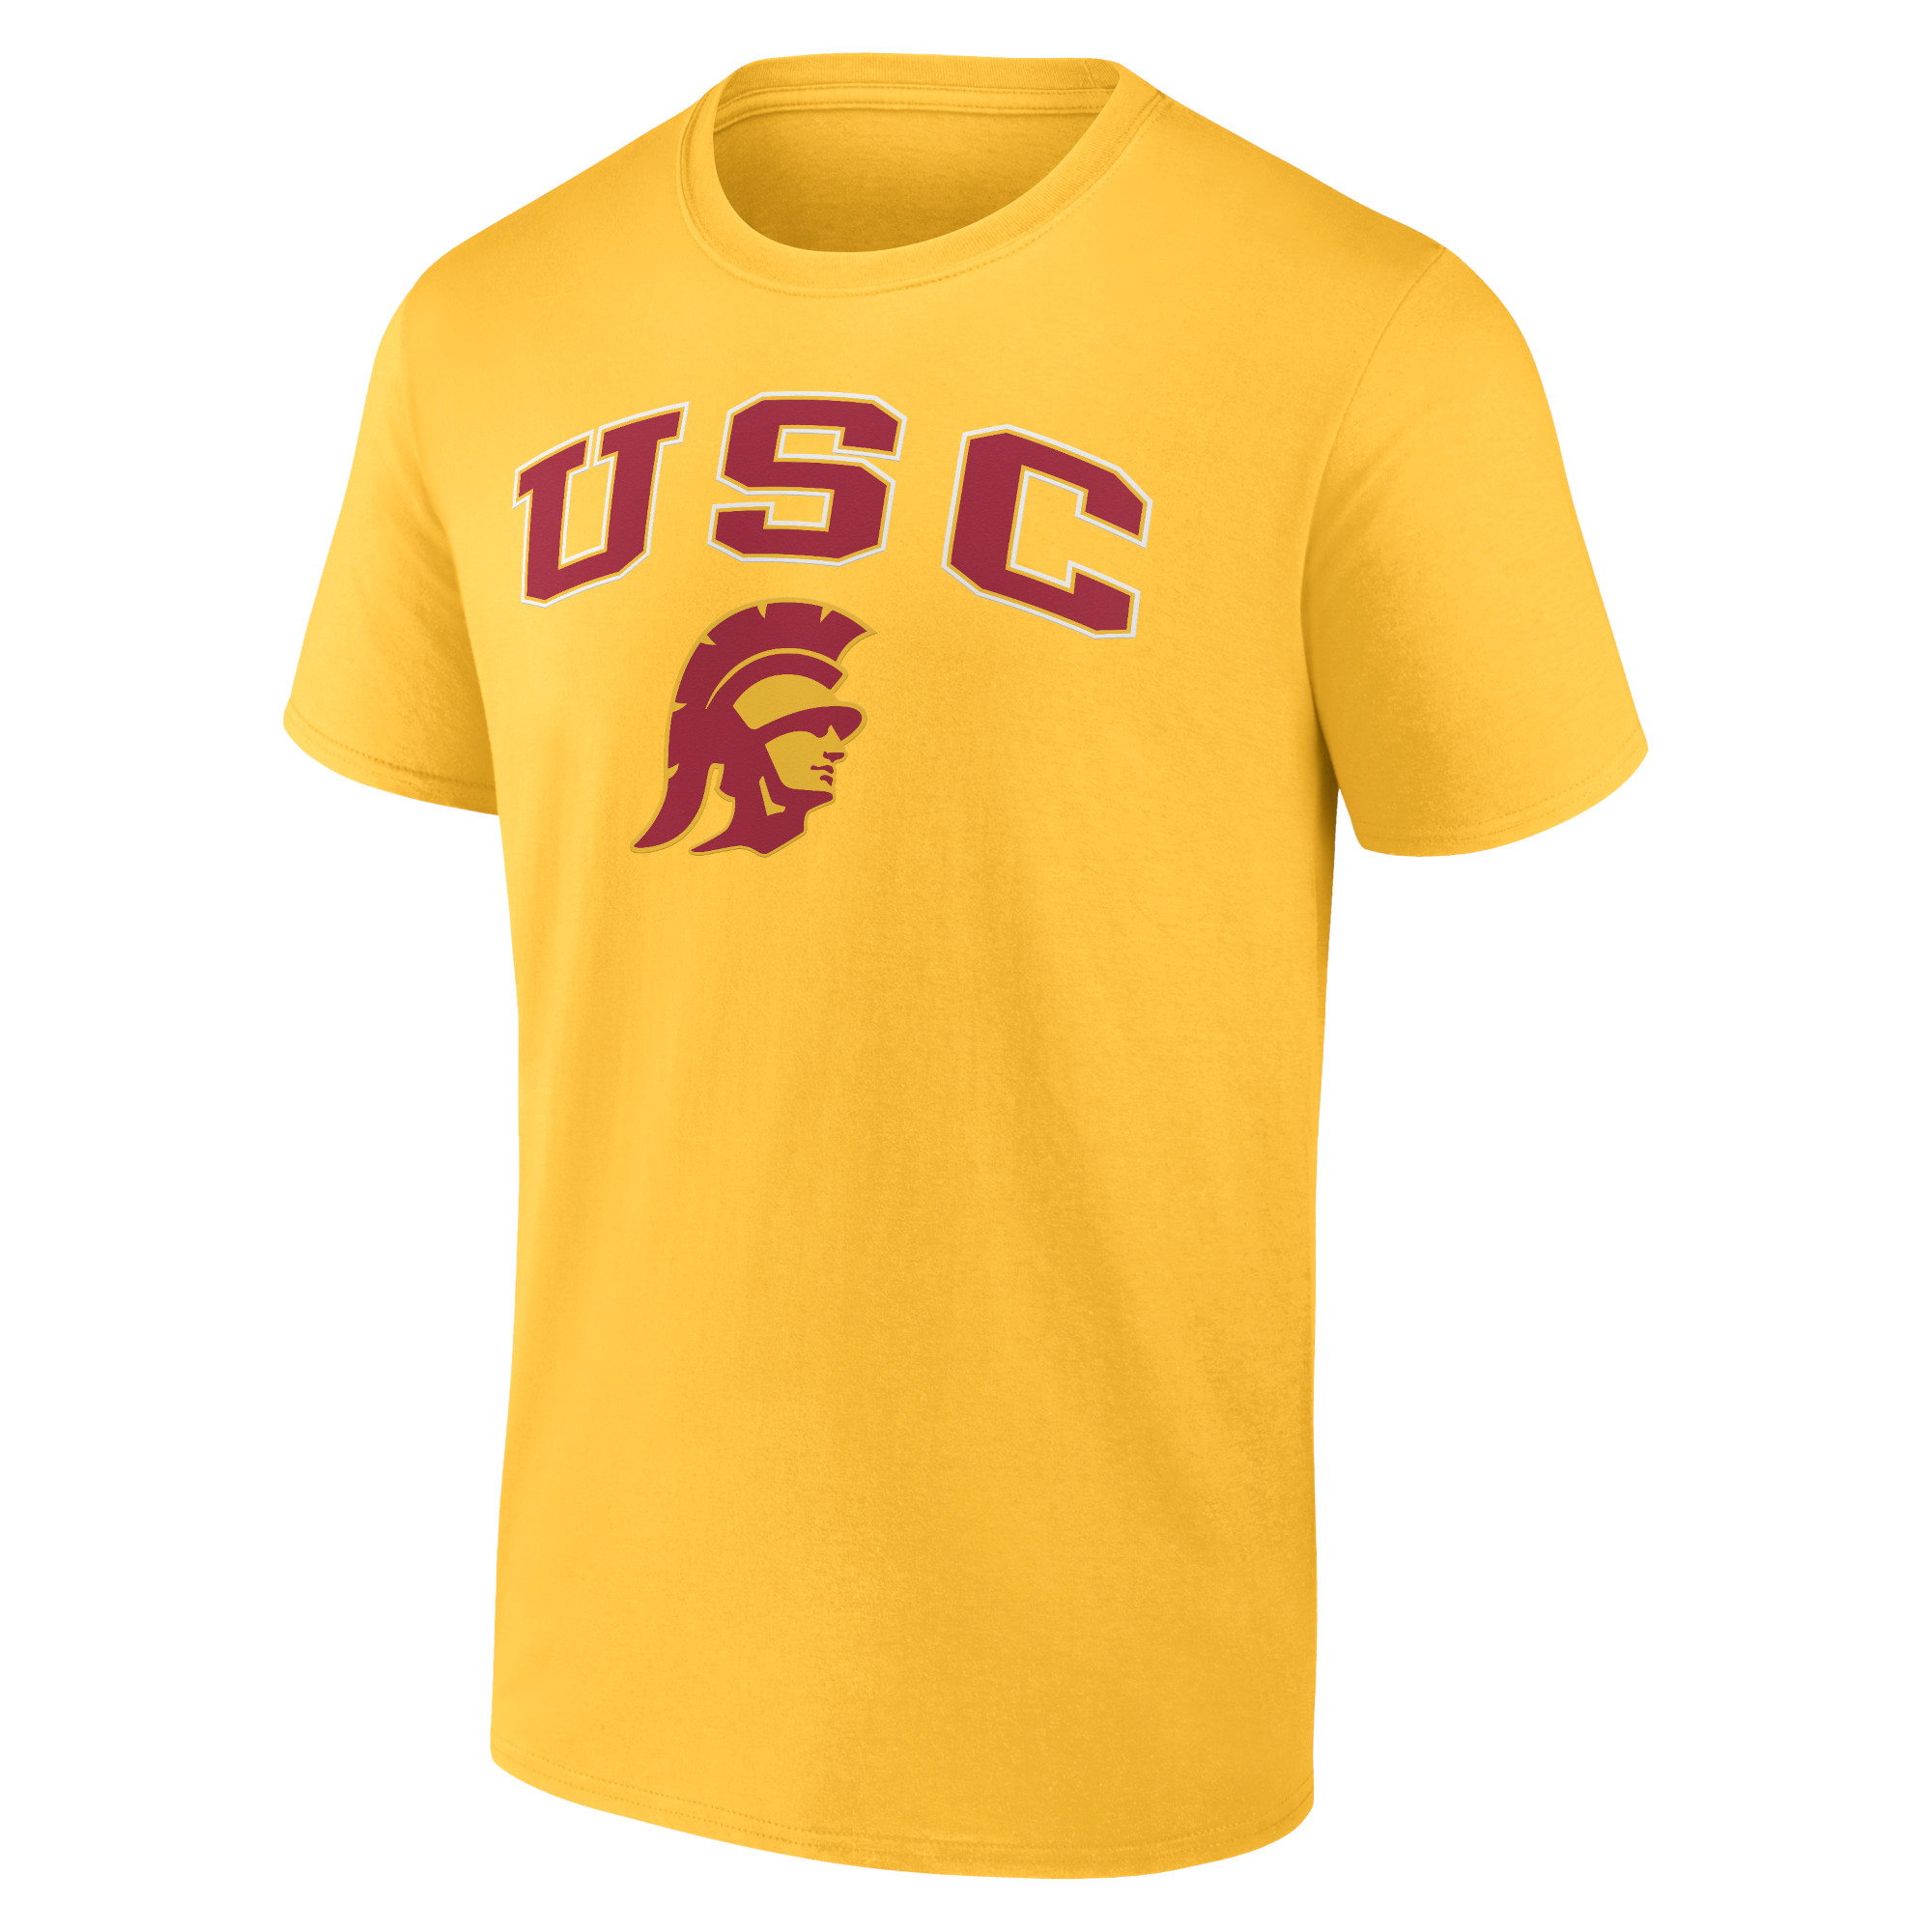 Men's Fanatics Branded Gold USC Trojans Campus T-Shirt - image 2 of 3